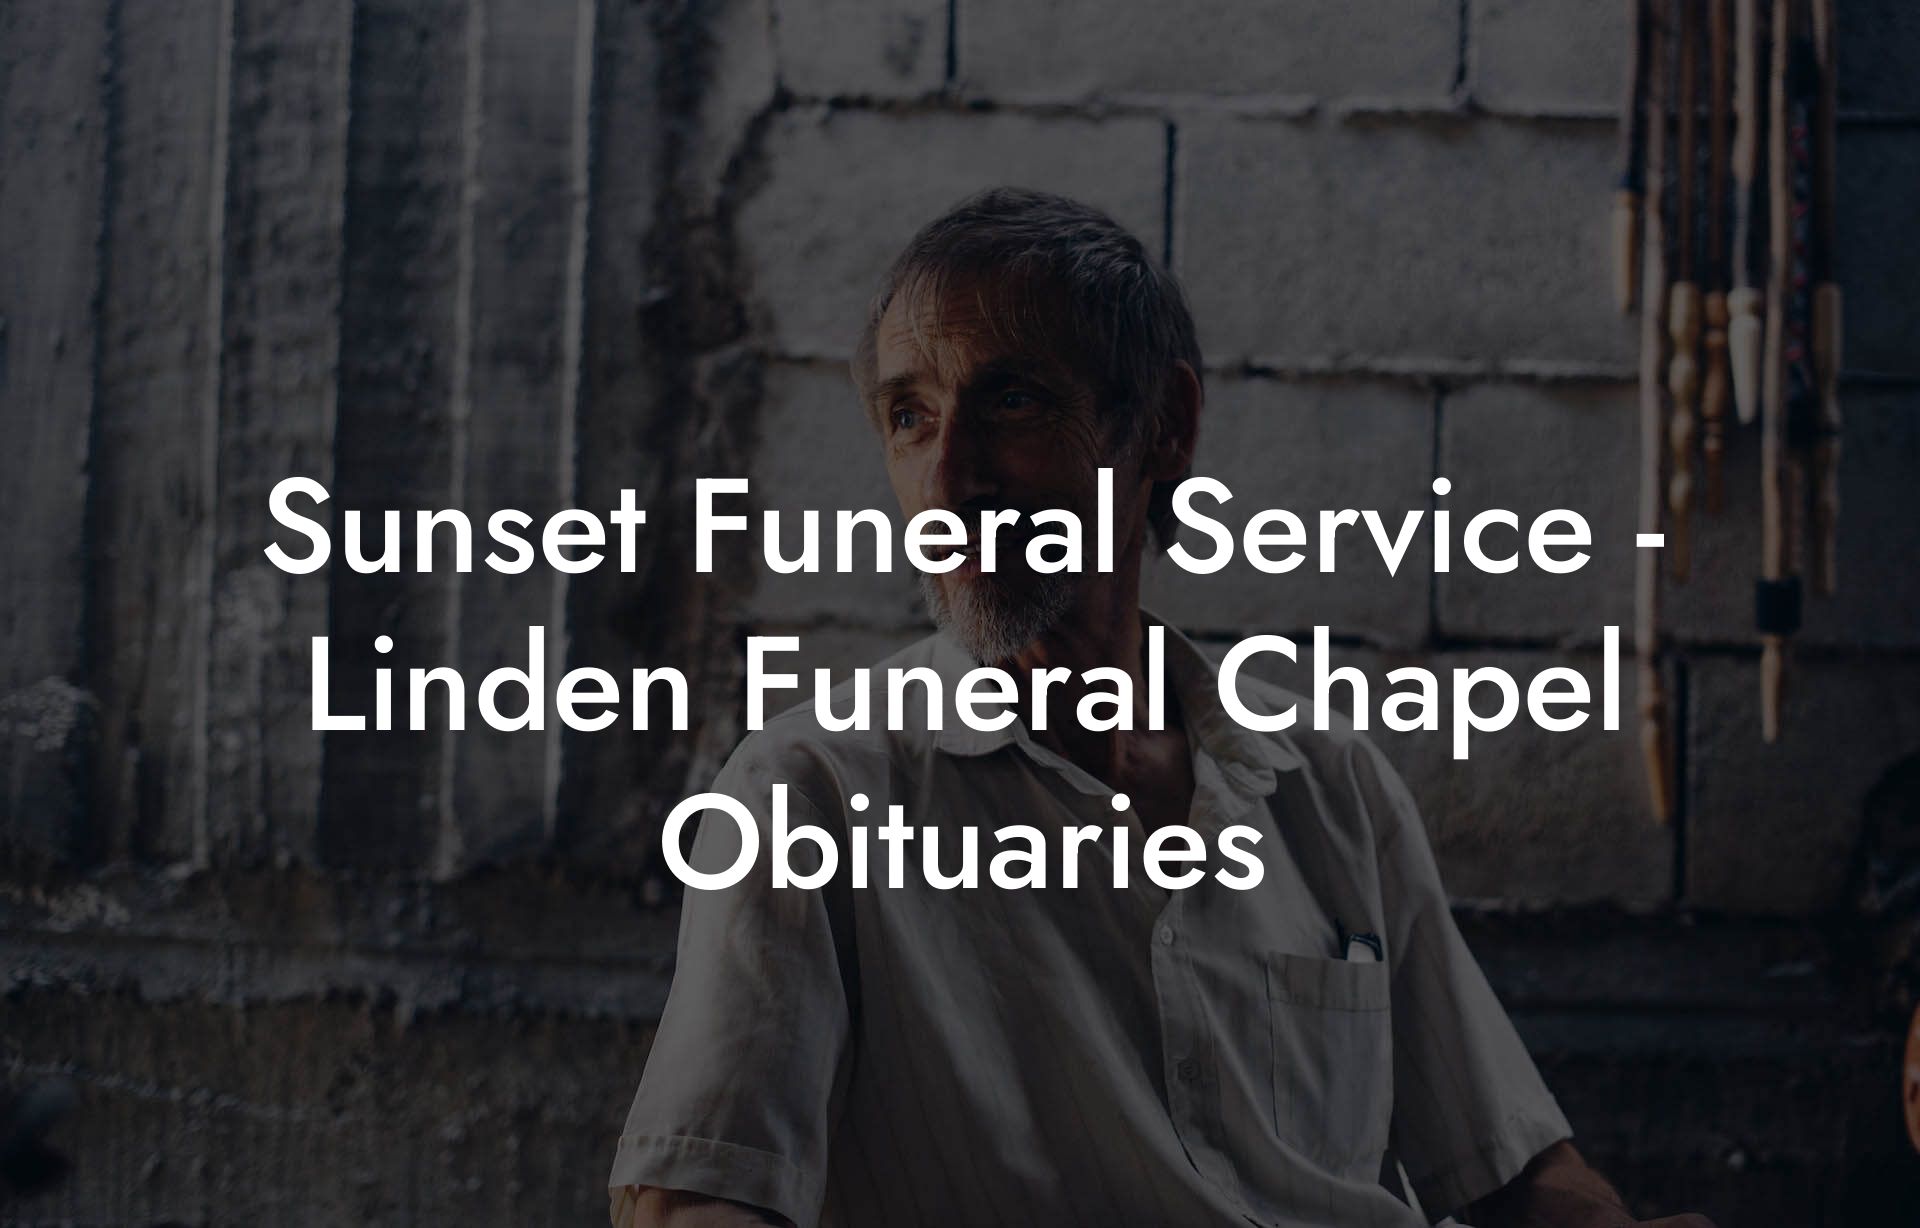 Sunset Funeral Service - Linden Funeral Chapel Obituaries